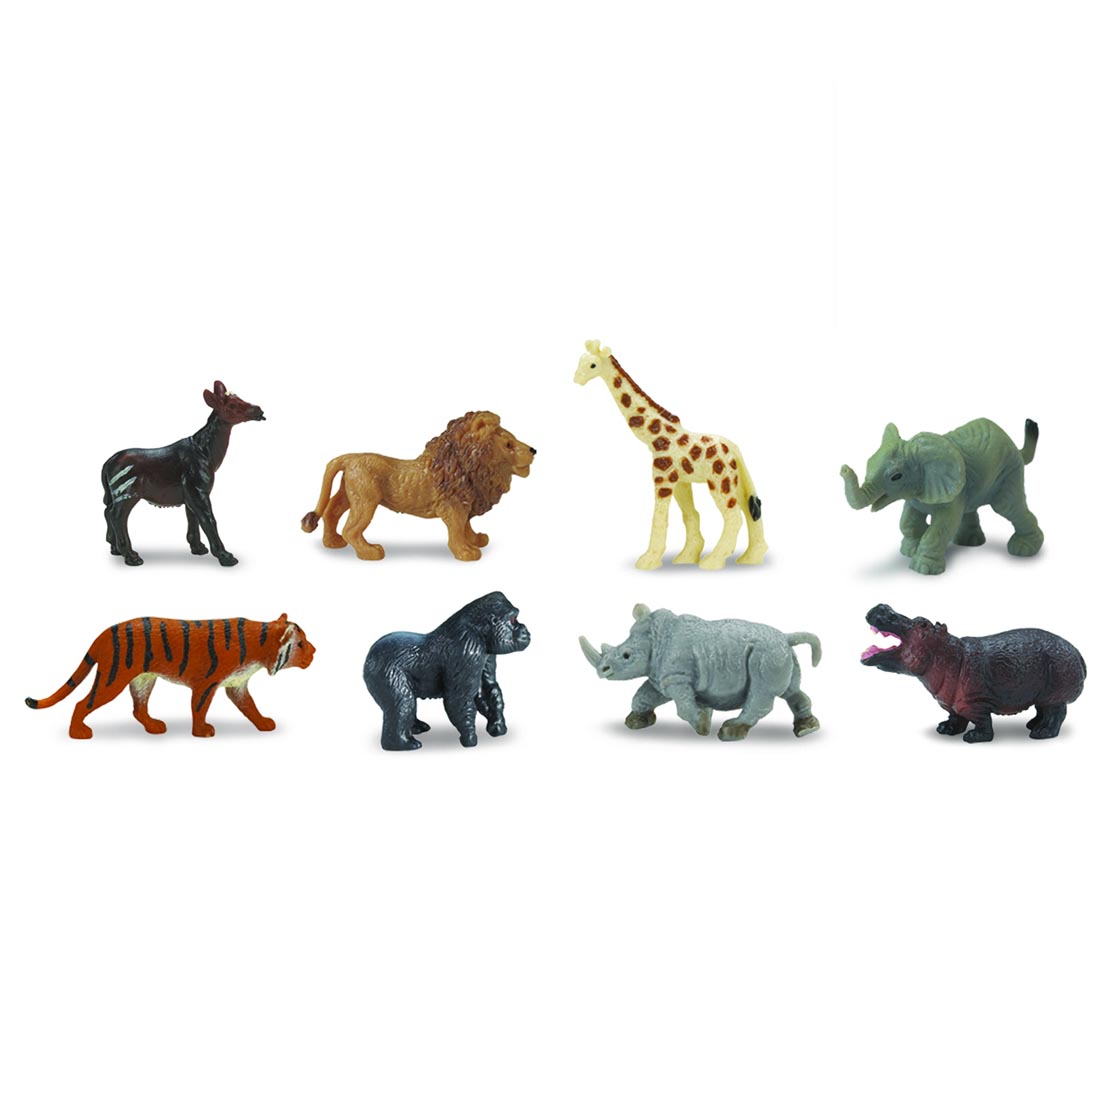 Wild Animal Mini Figurines include okapi, lion, giraffe, elephant, tiger, gorilla, rhino and hippo